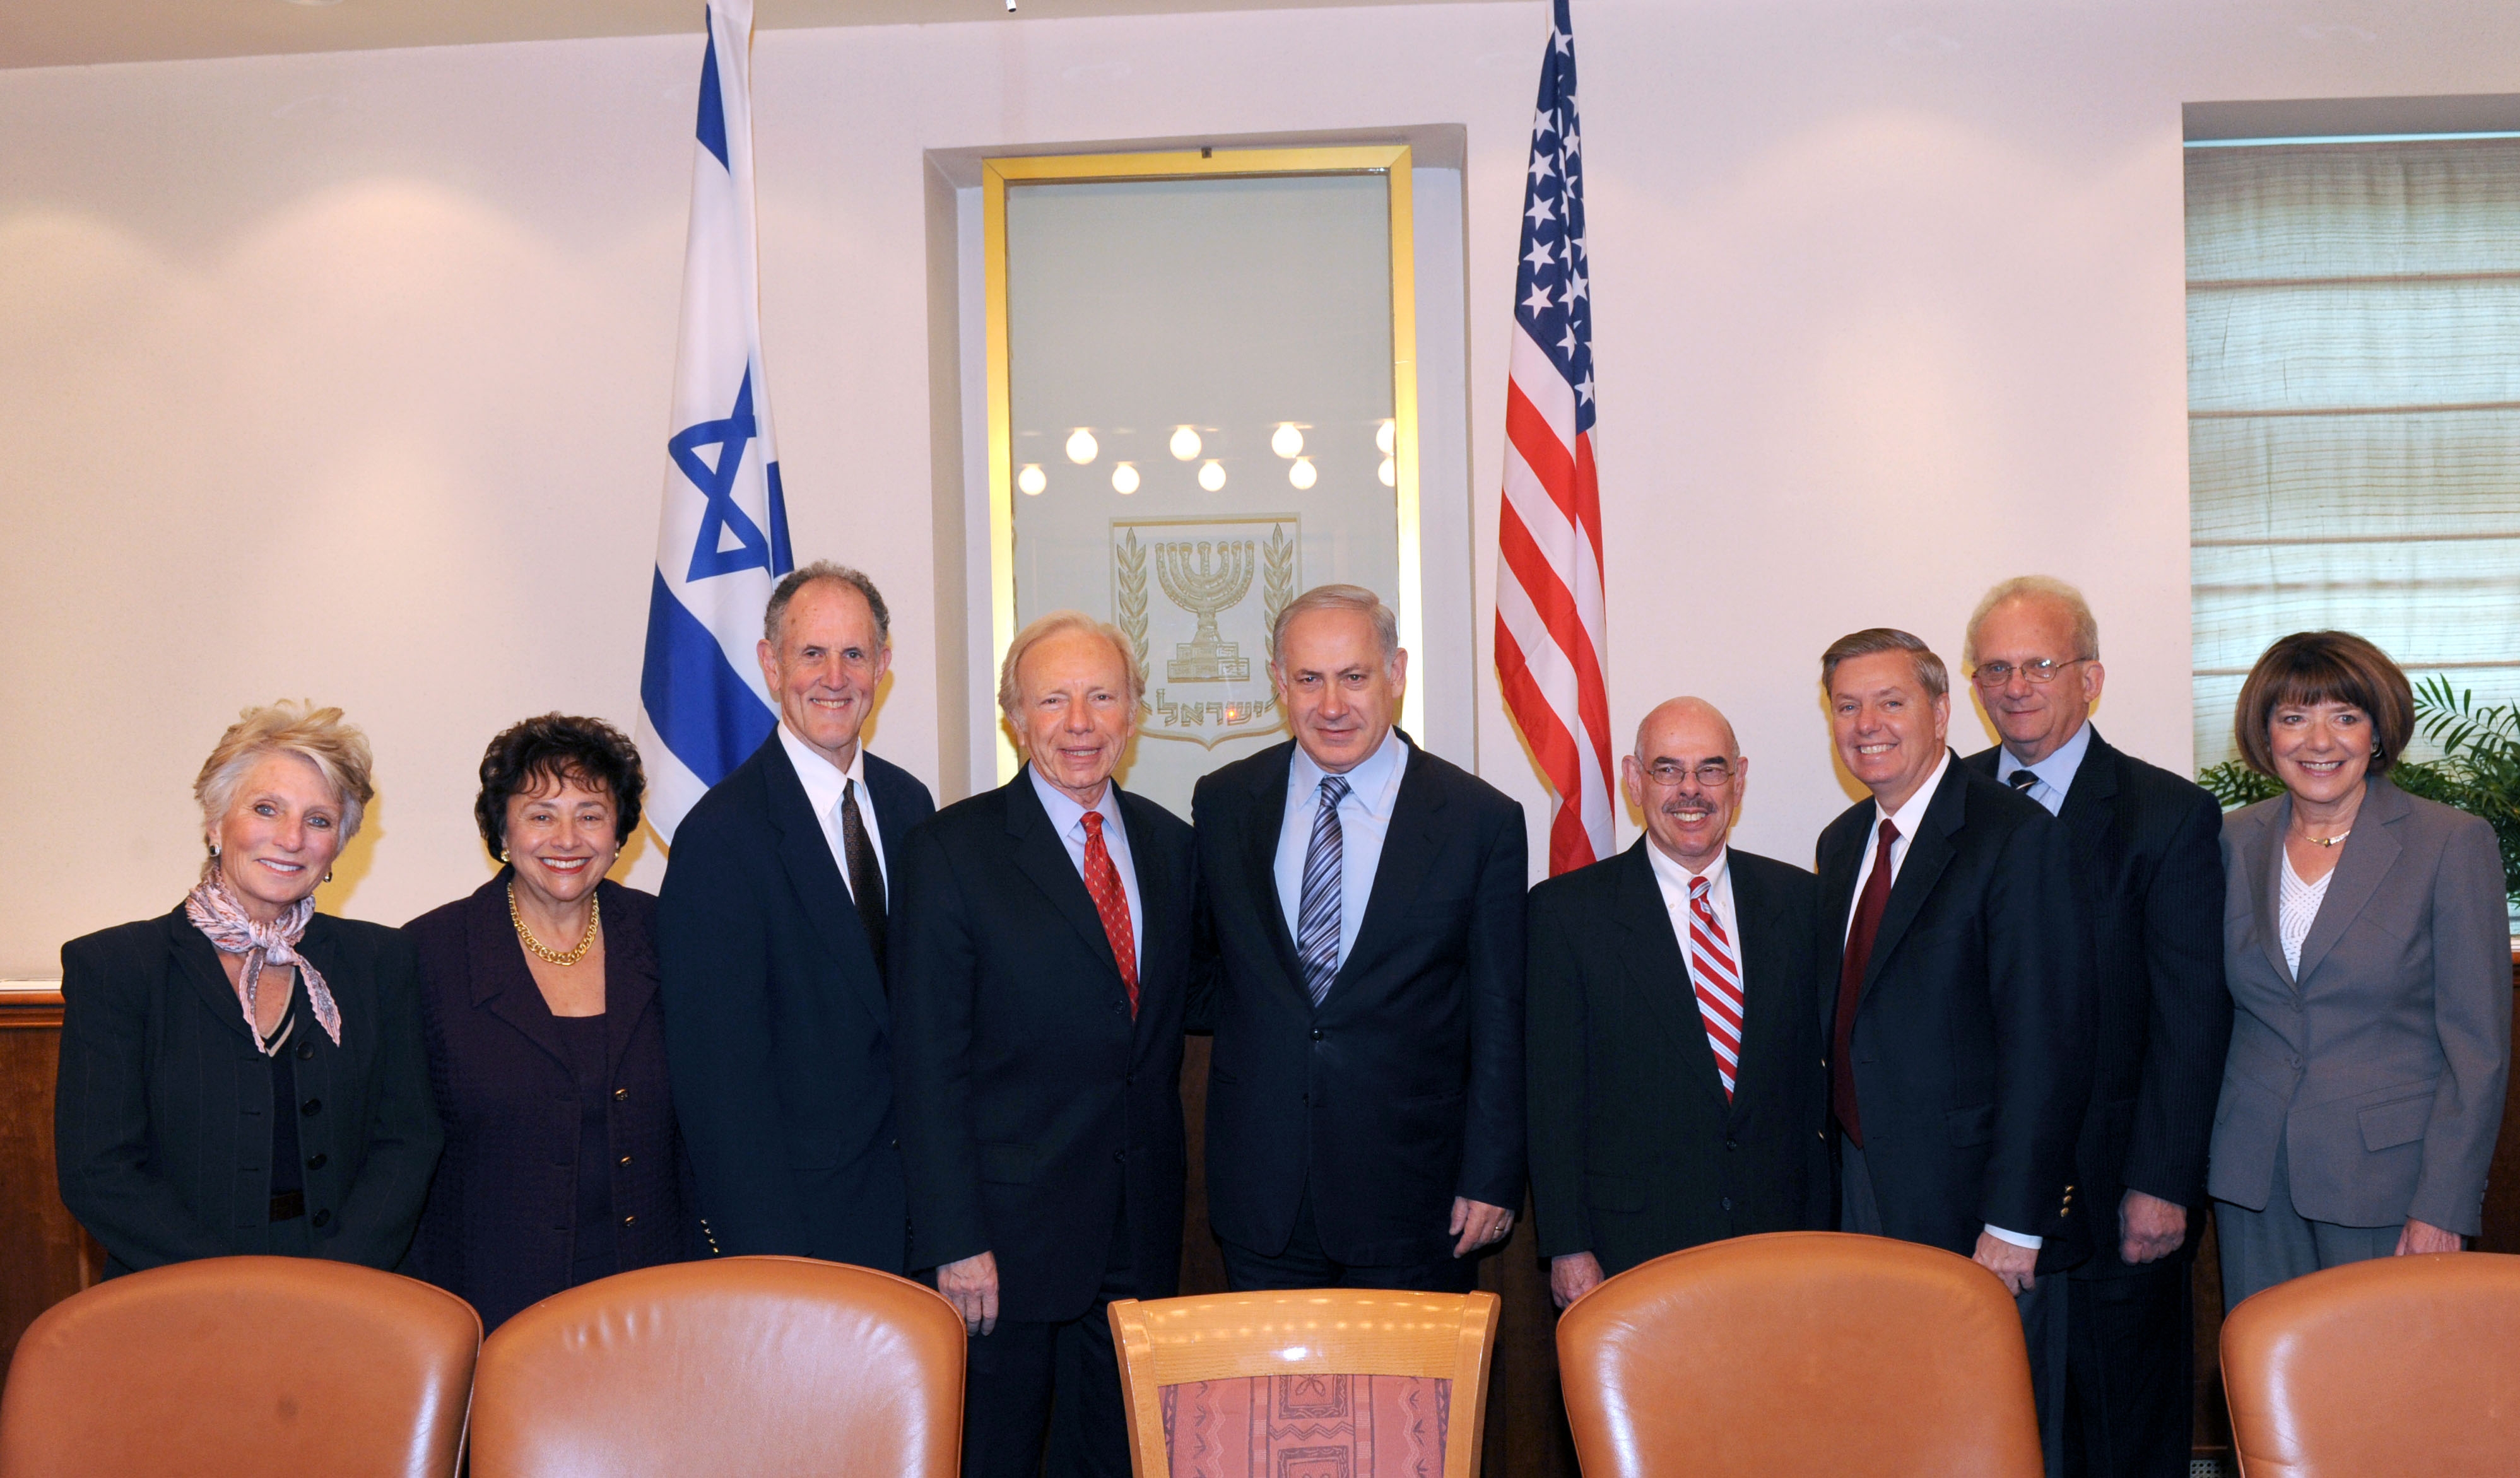 Photograph of members of the U.S. Congress with Israeli Prime Minister Benjamin Netanyahu at the Saban Forum, 2009 November